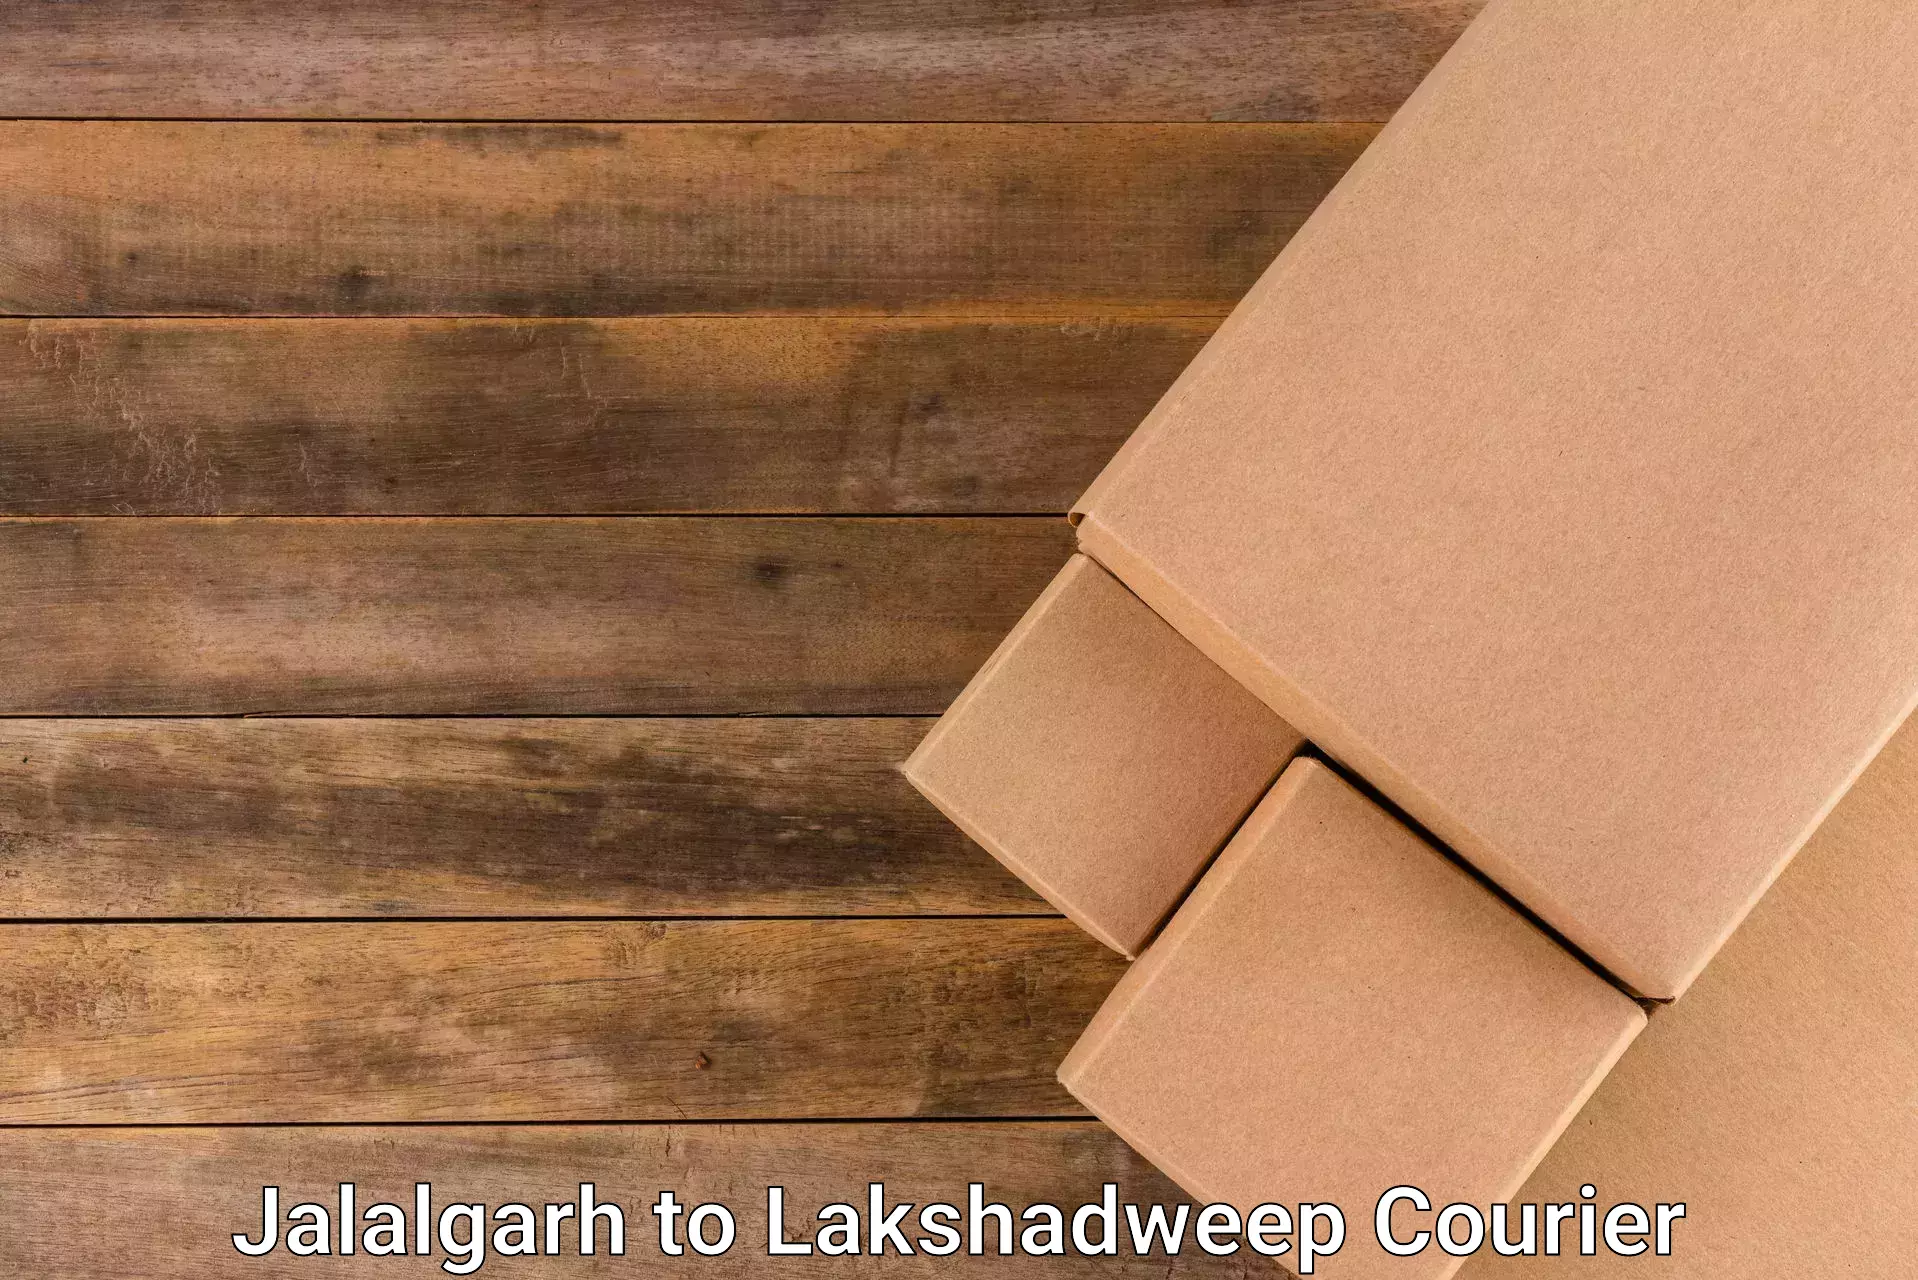 Subscription-based courier Jalalgarh to Lakshadweep